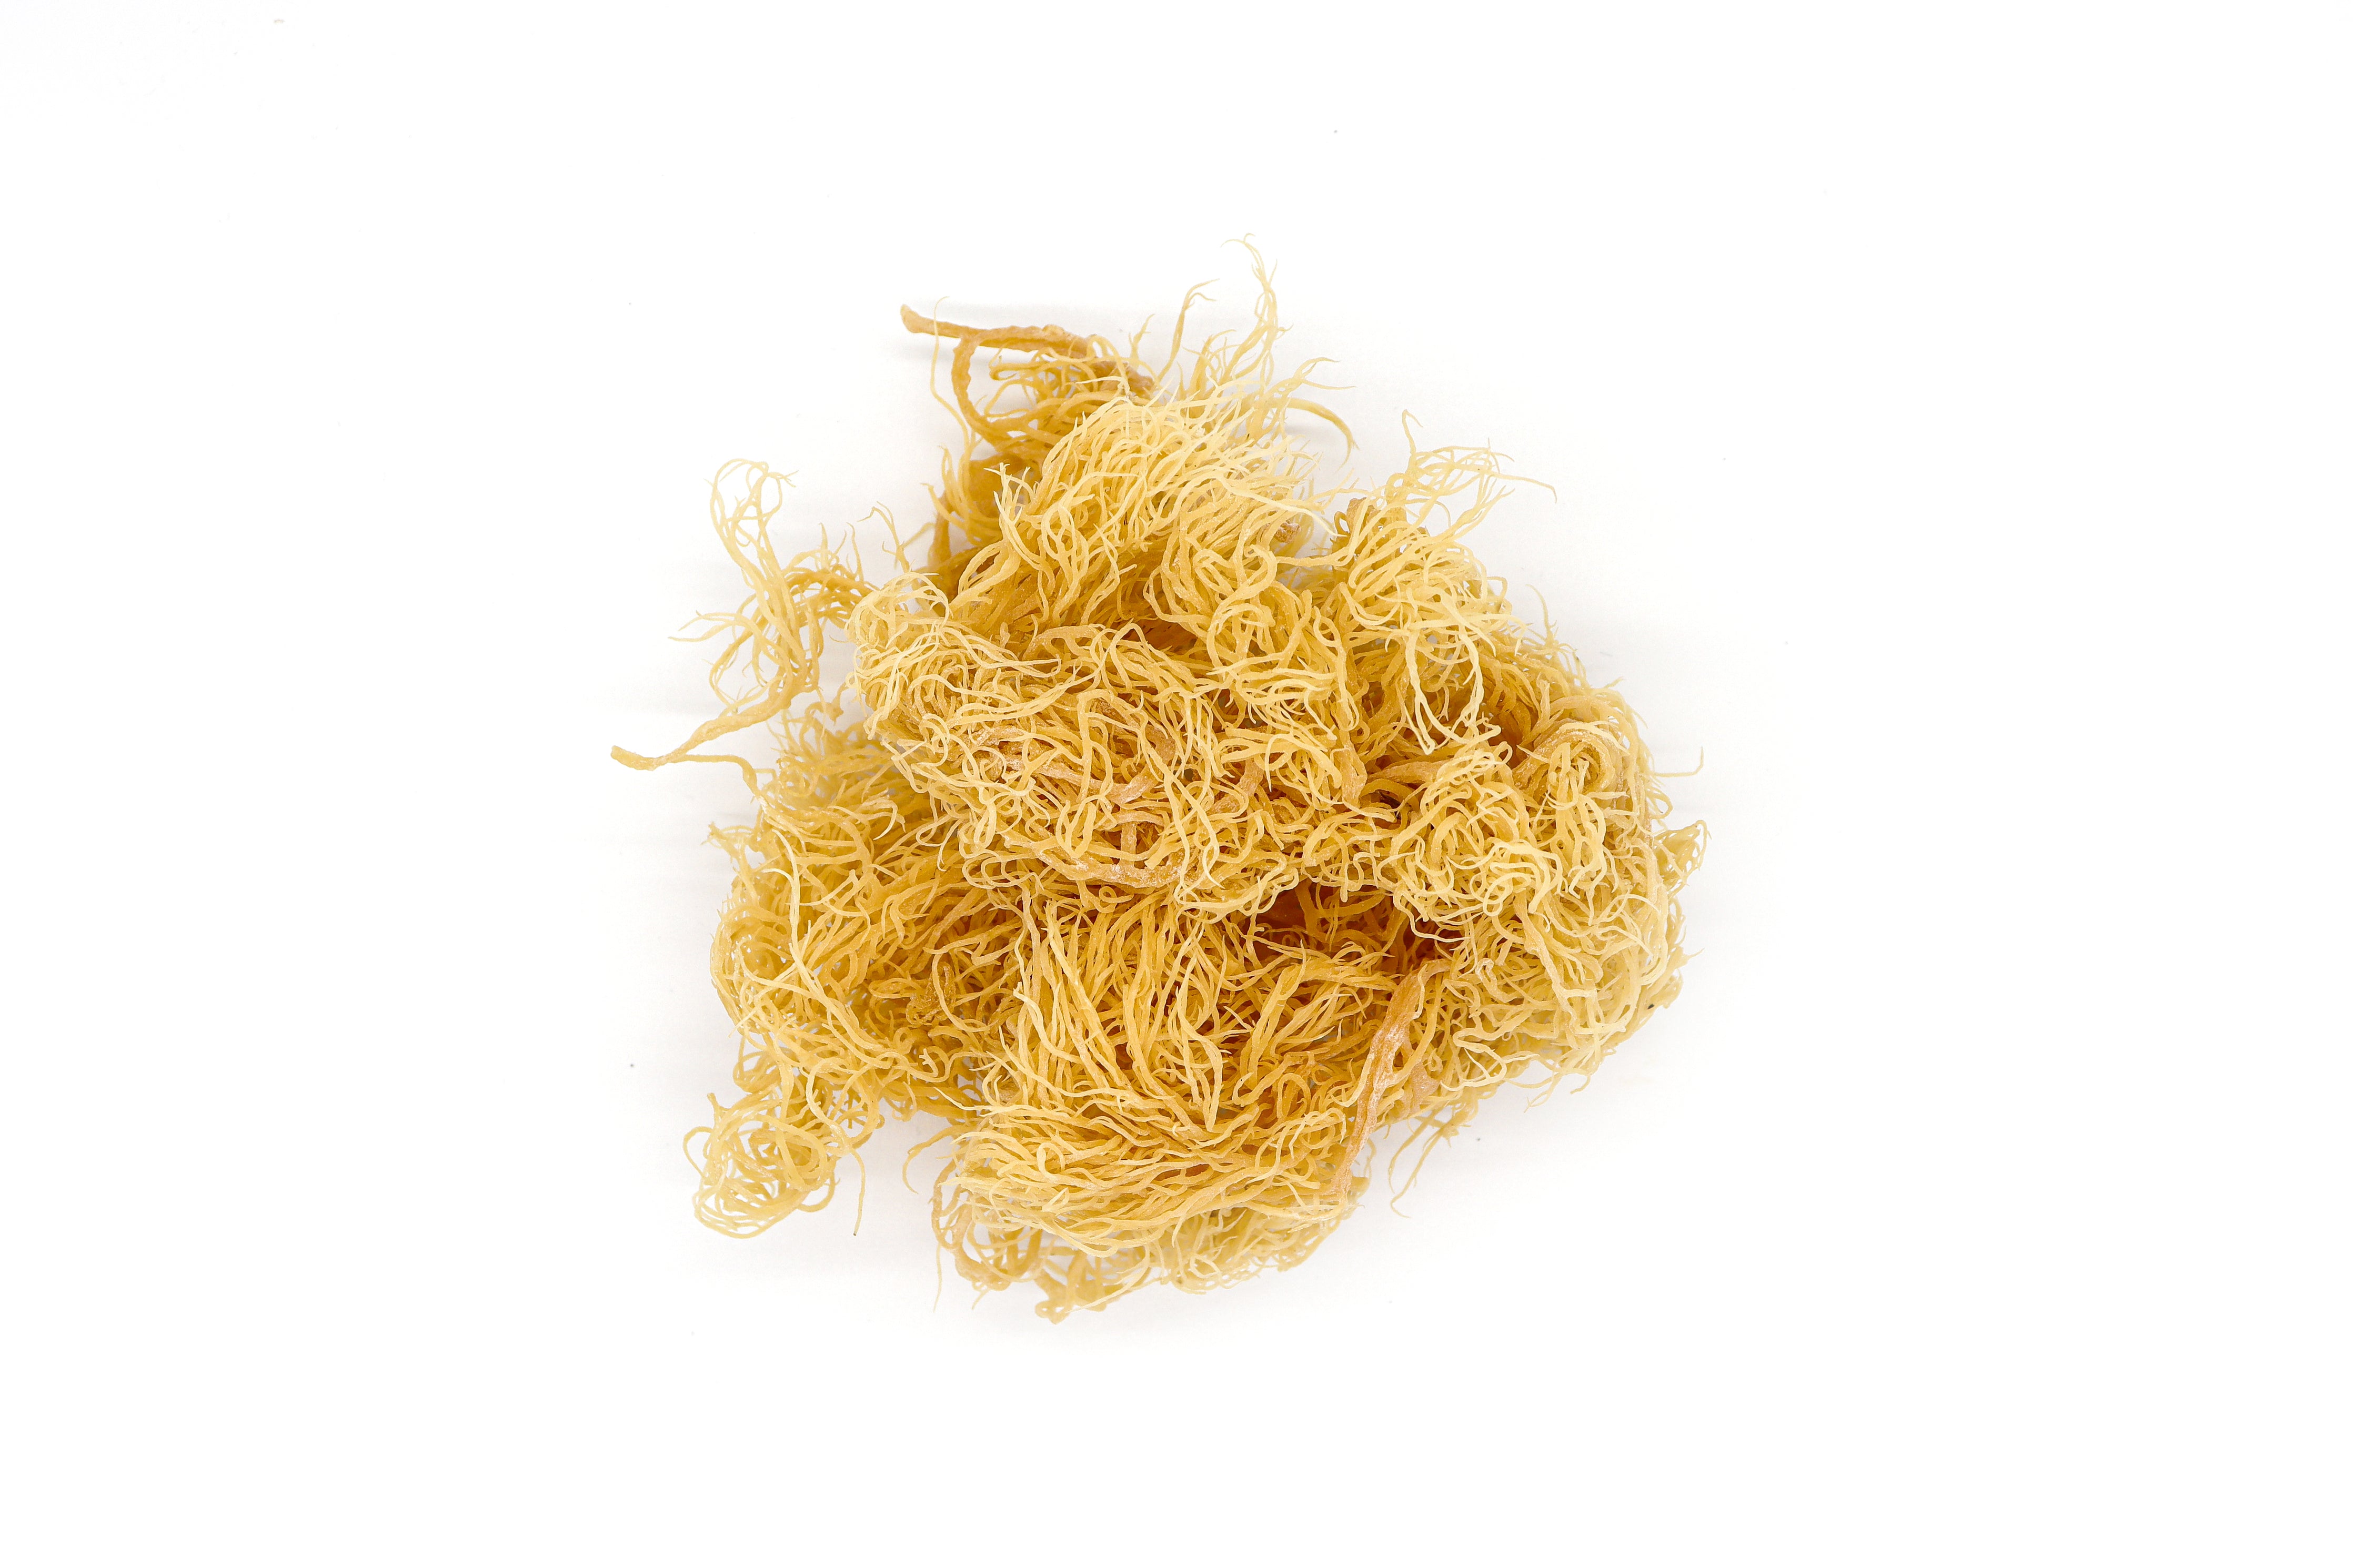 1kg Gold St Lucia Sea Moss - Eucheuma Cottonii - St Lucia Sea Moss Organic Buy UK 